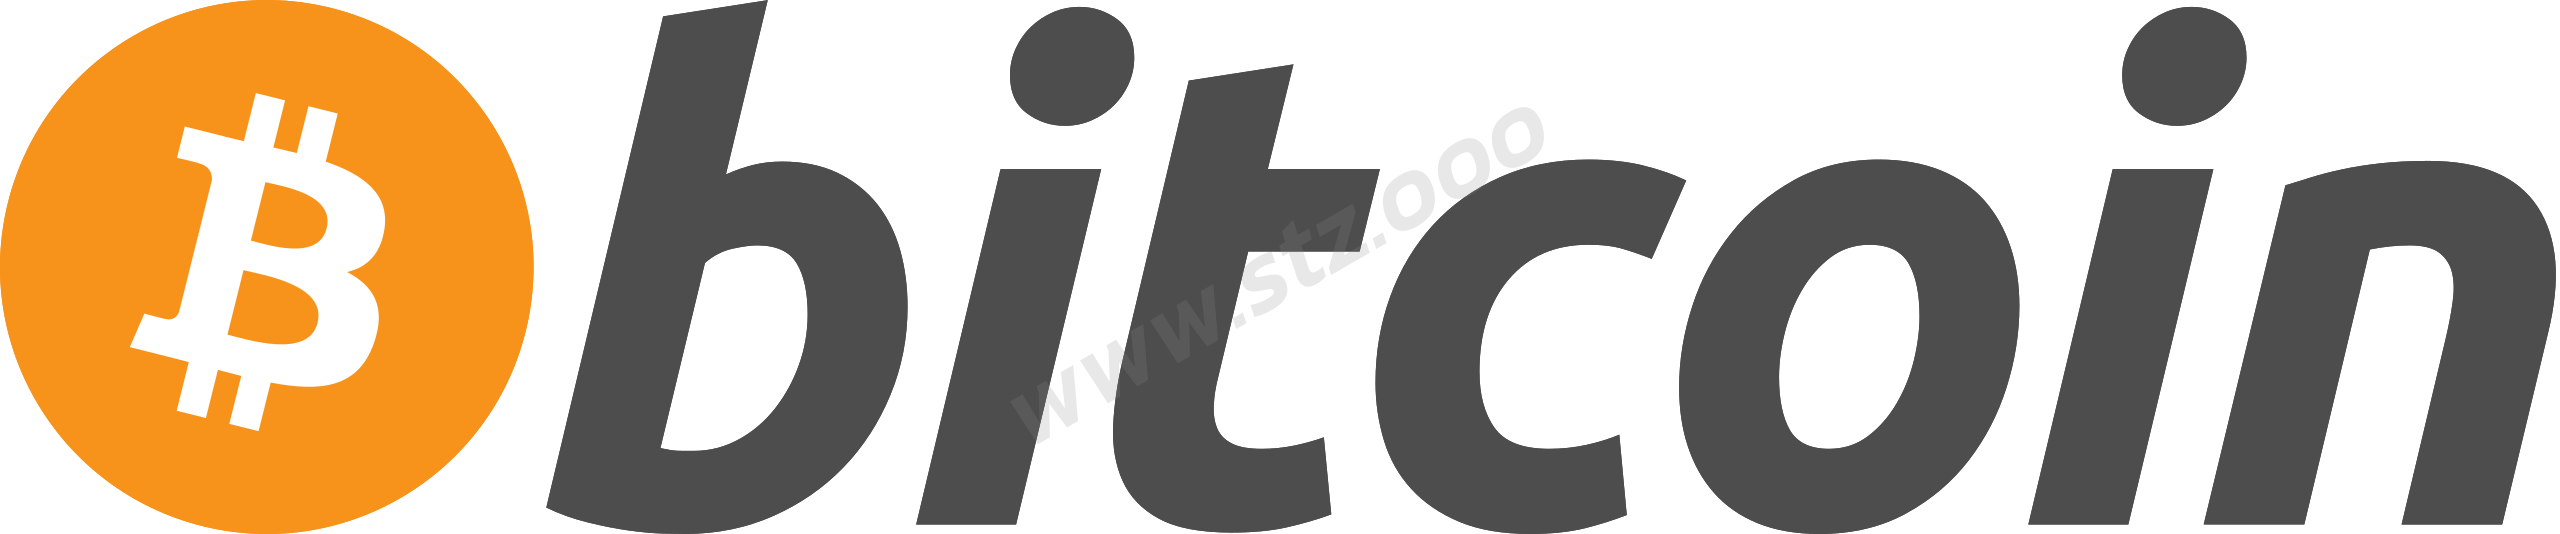 2560px-Bitcoin_logo.svg.png